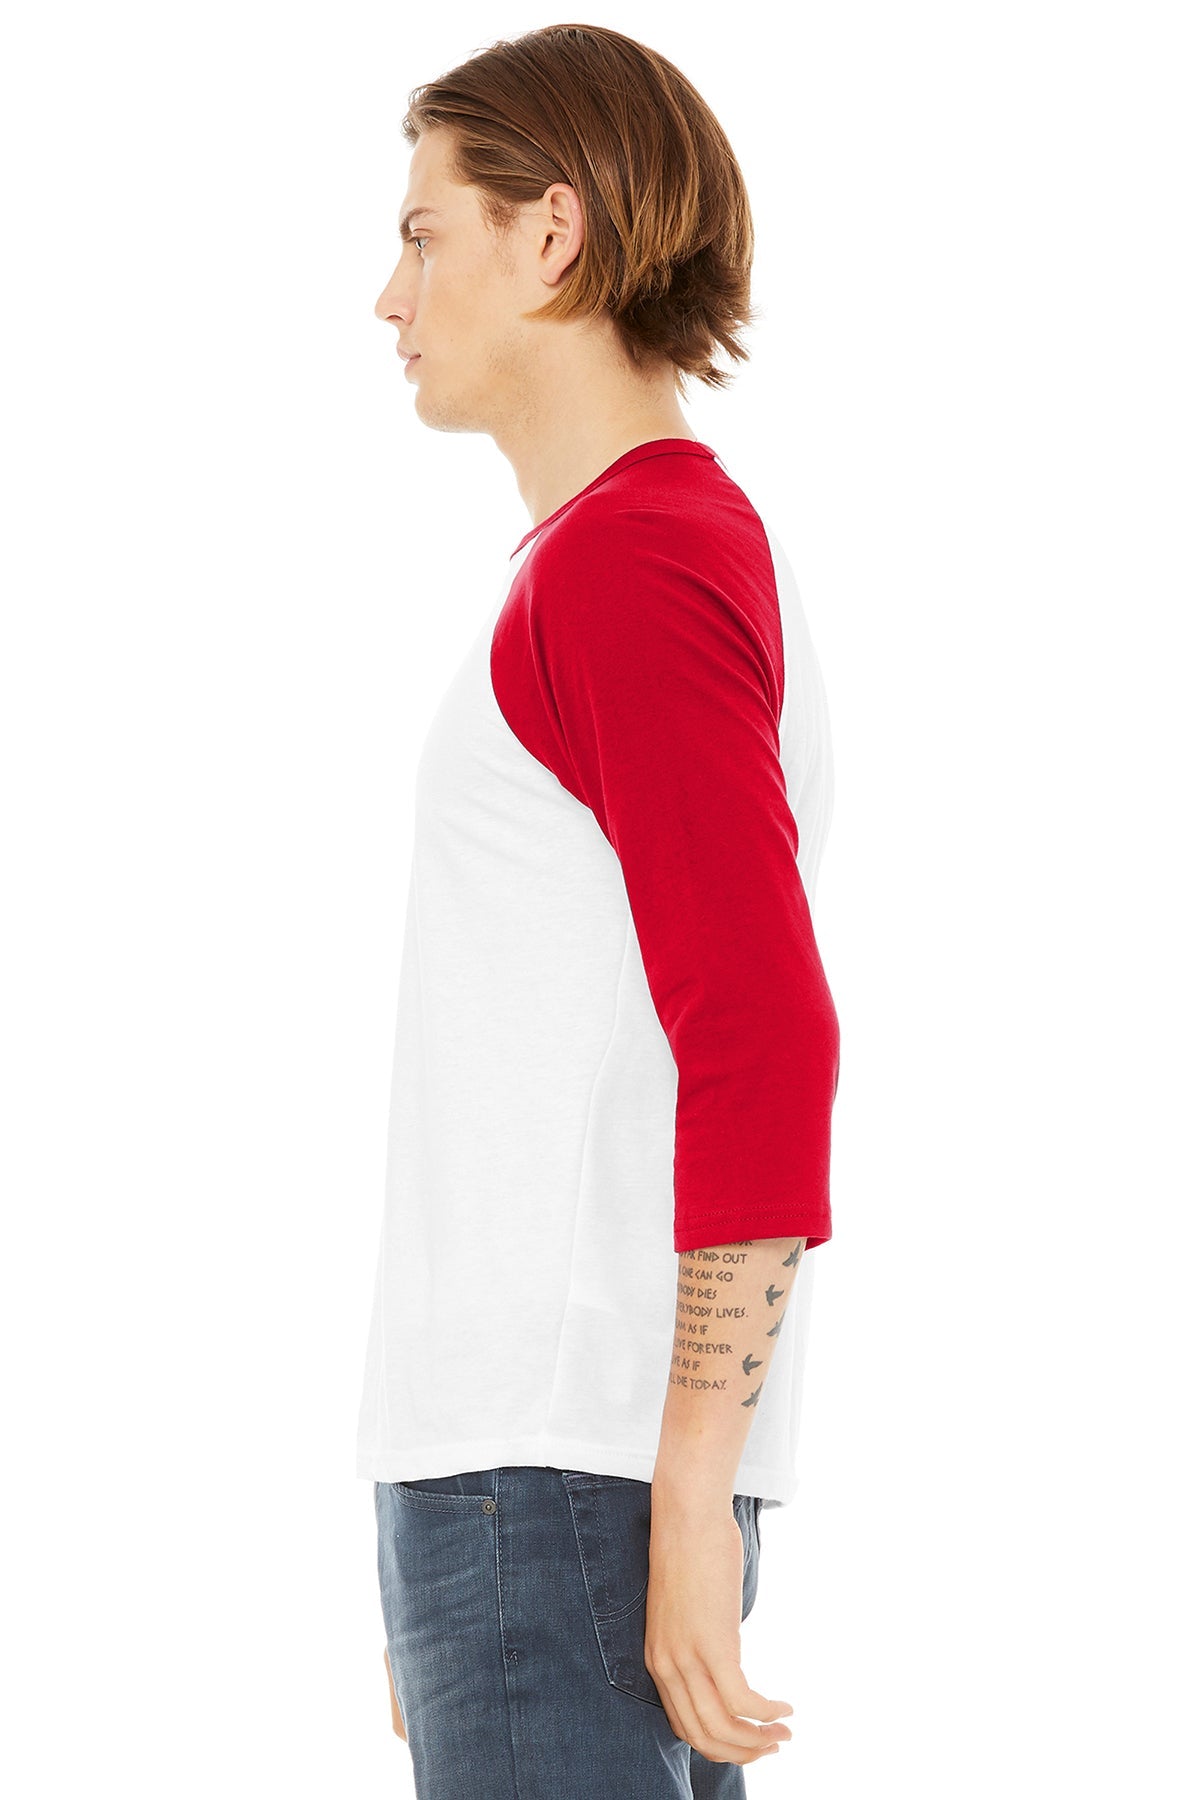 bella + canvas unisex 3/4-sleeve baseball t-shirt 3200 white/ red